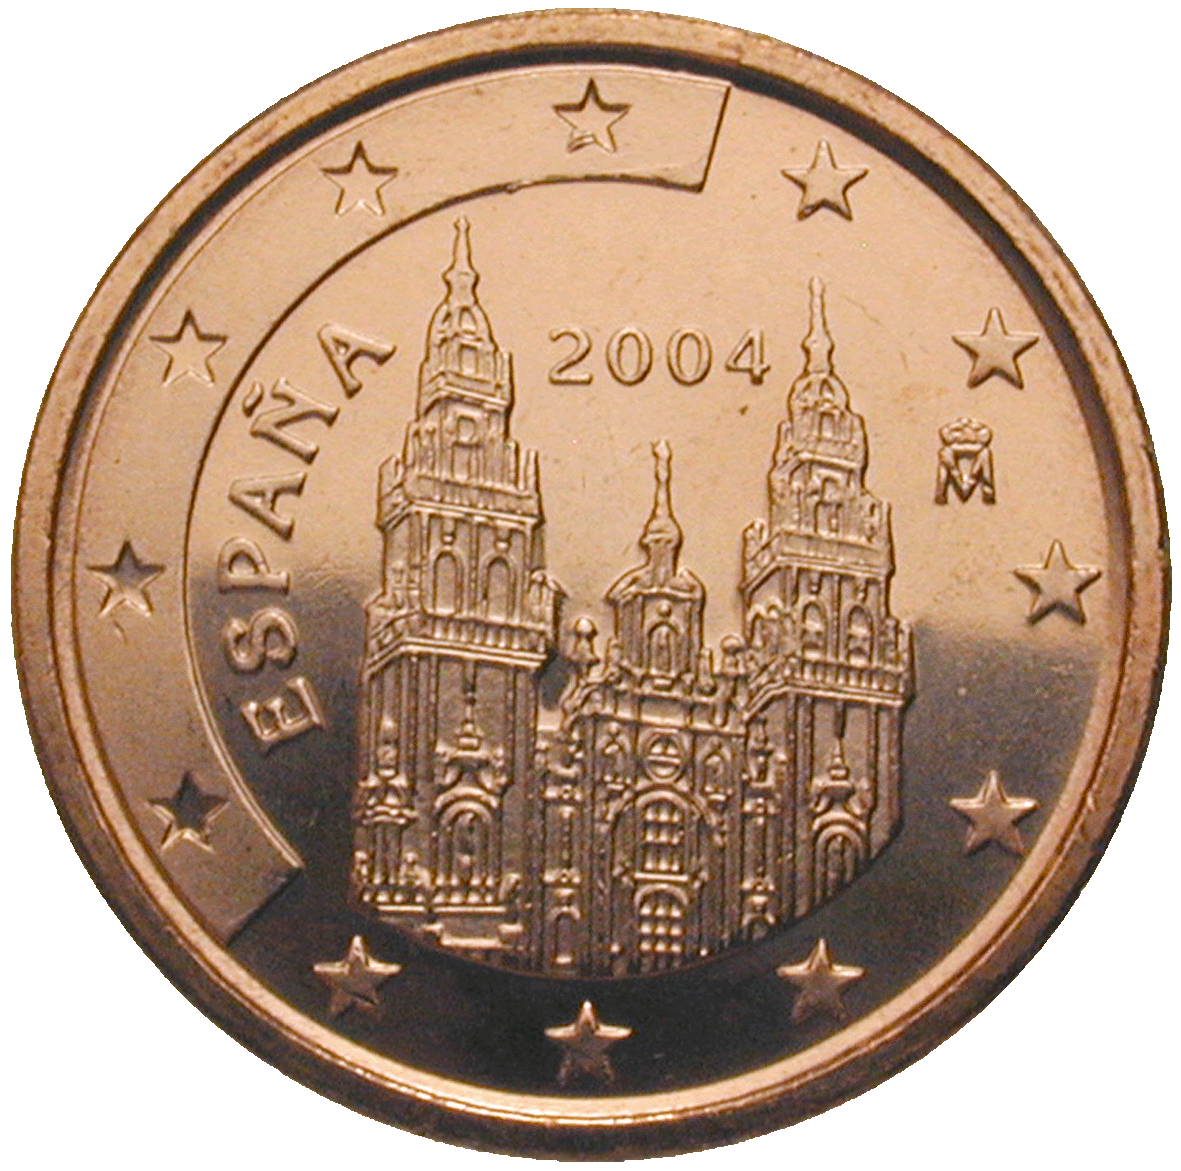 Kingdom of Spain, Juan Carlos, 1 Euro Cent 2004 (obverse)